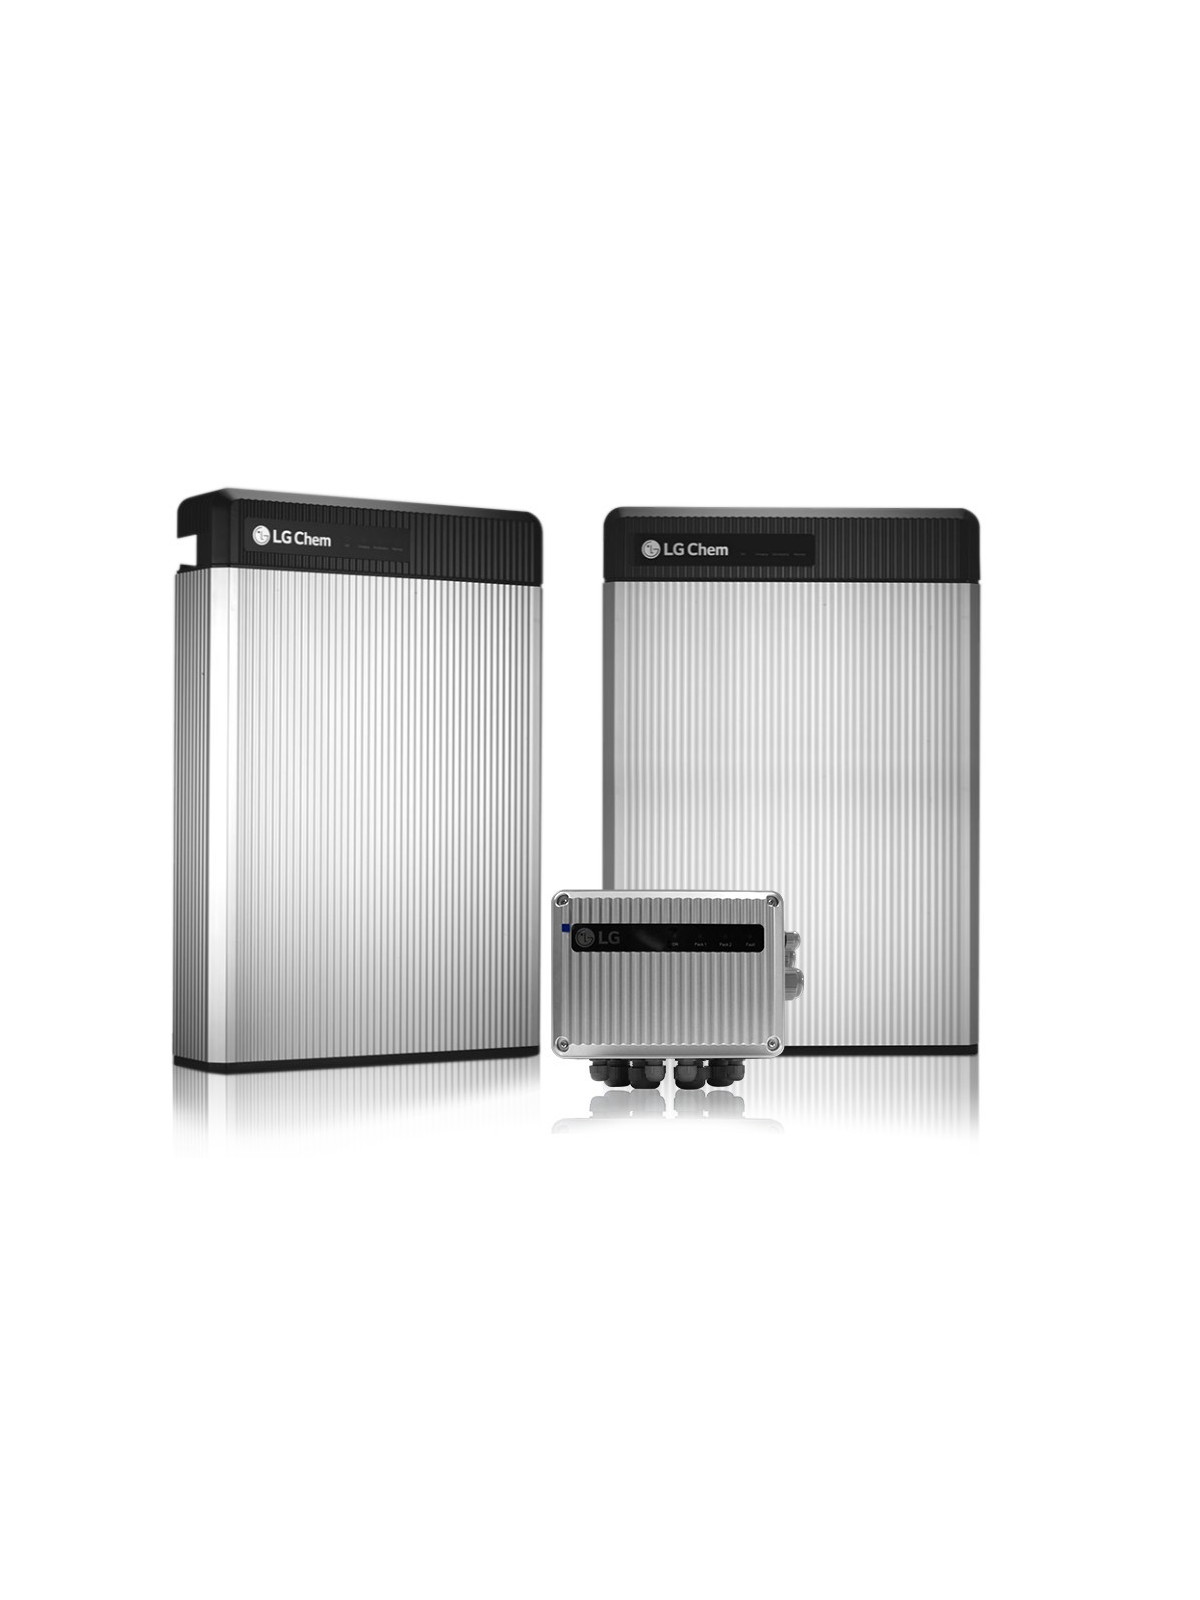 LG CHEM RESU Plus 13kWh battery kit